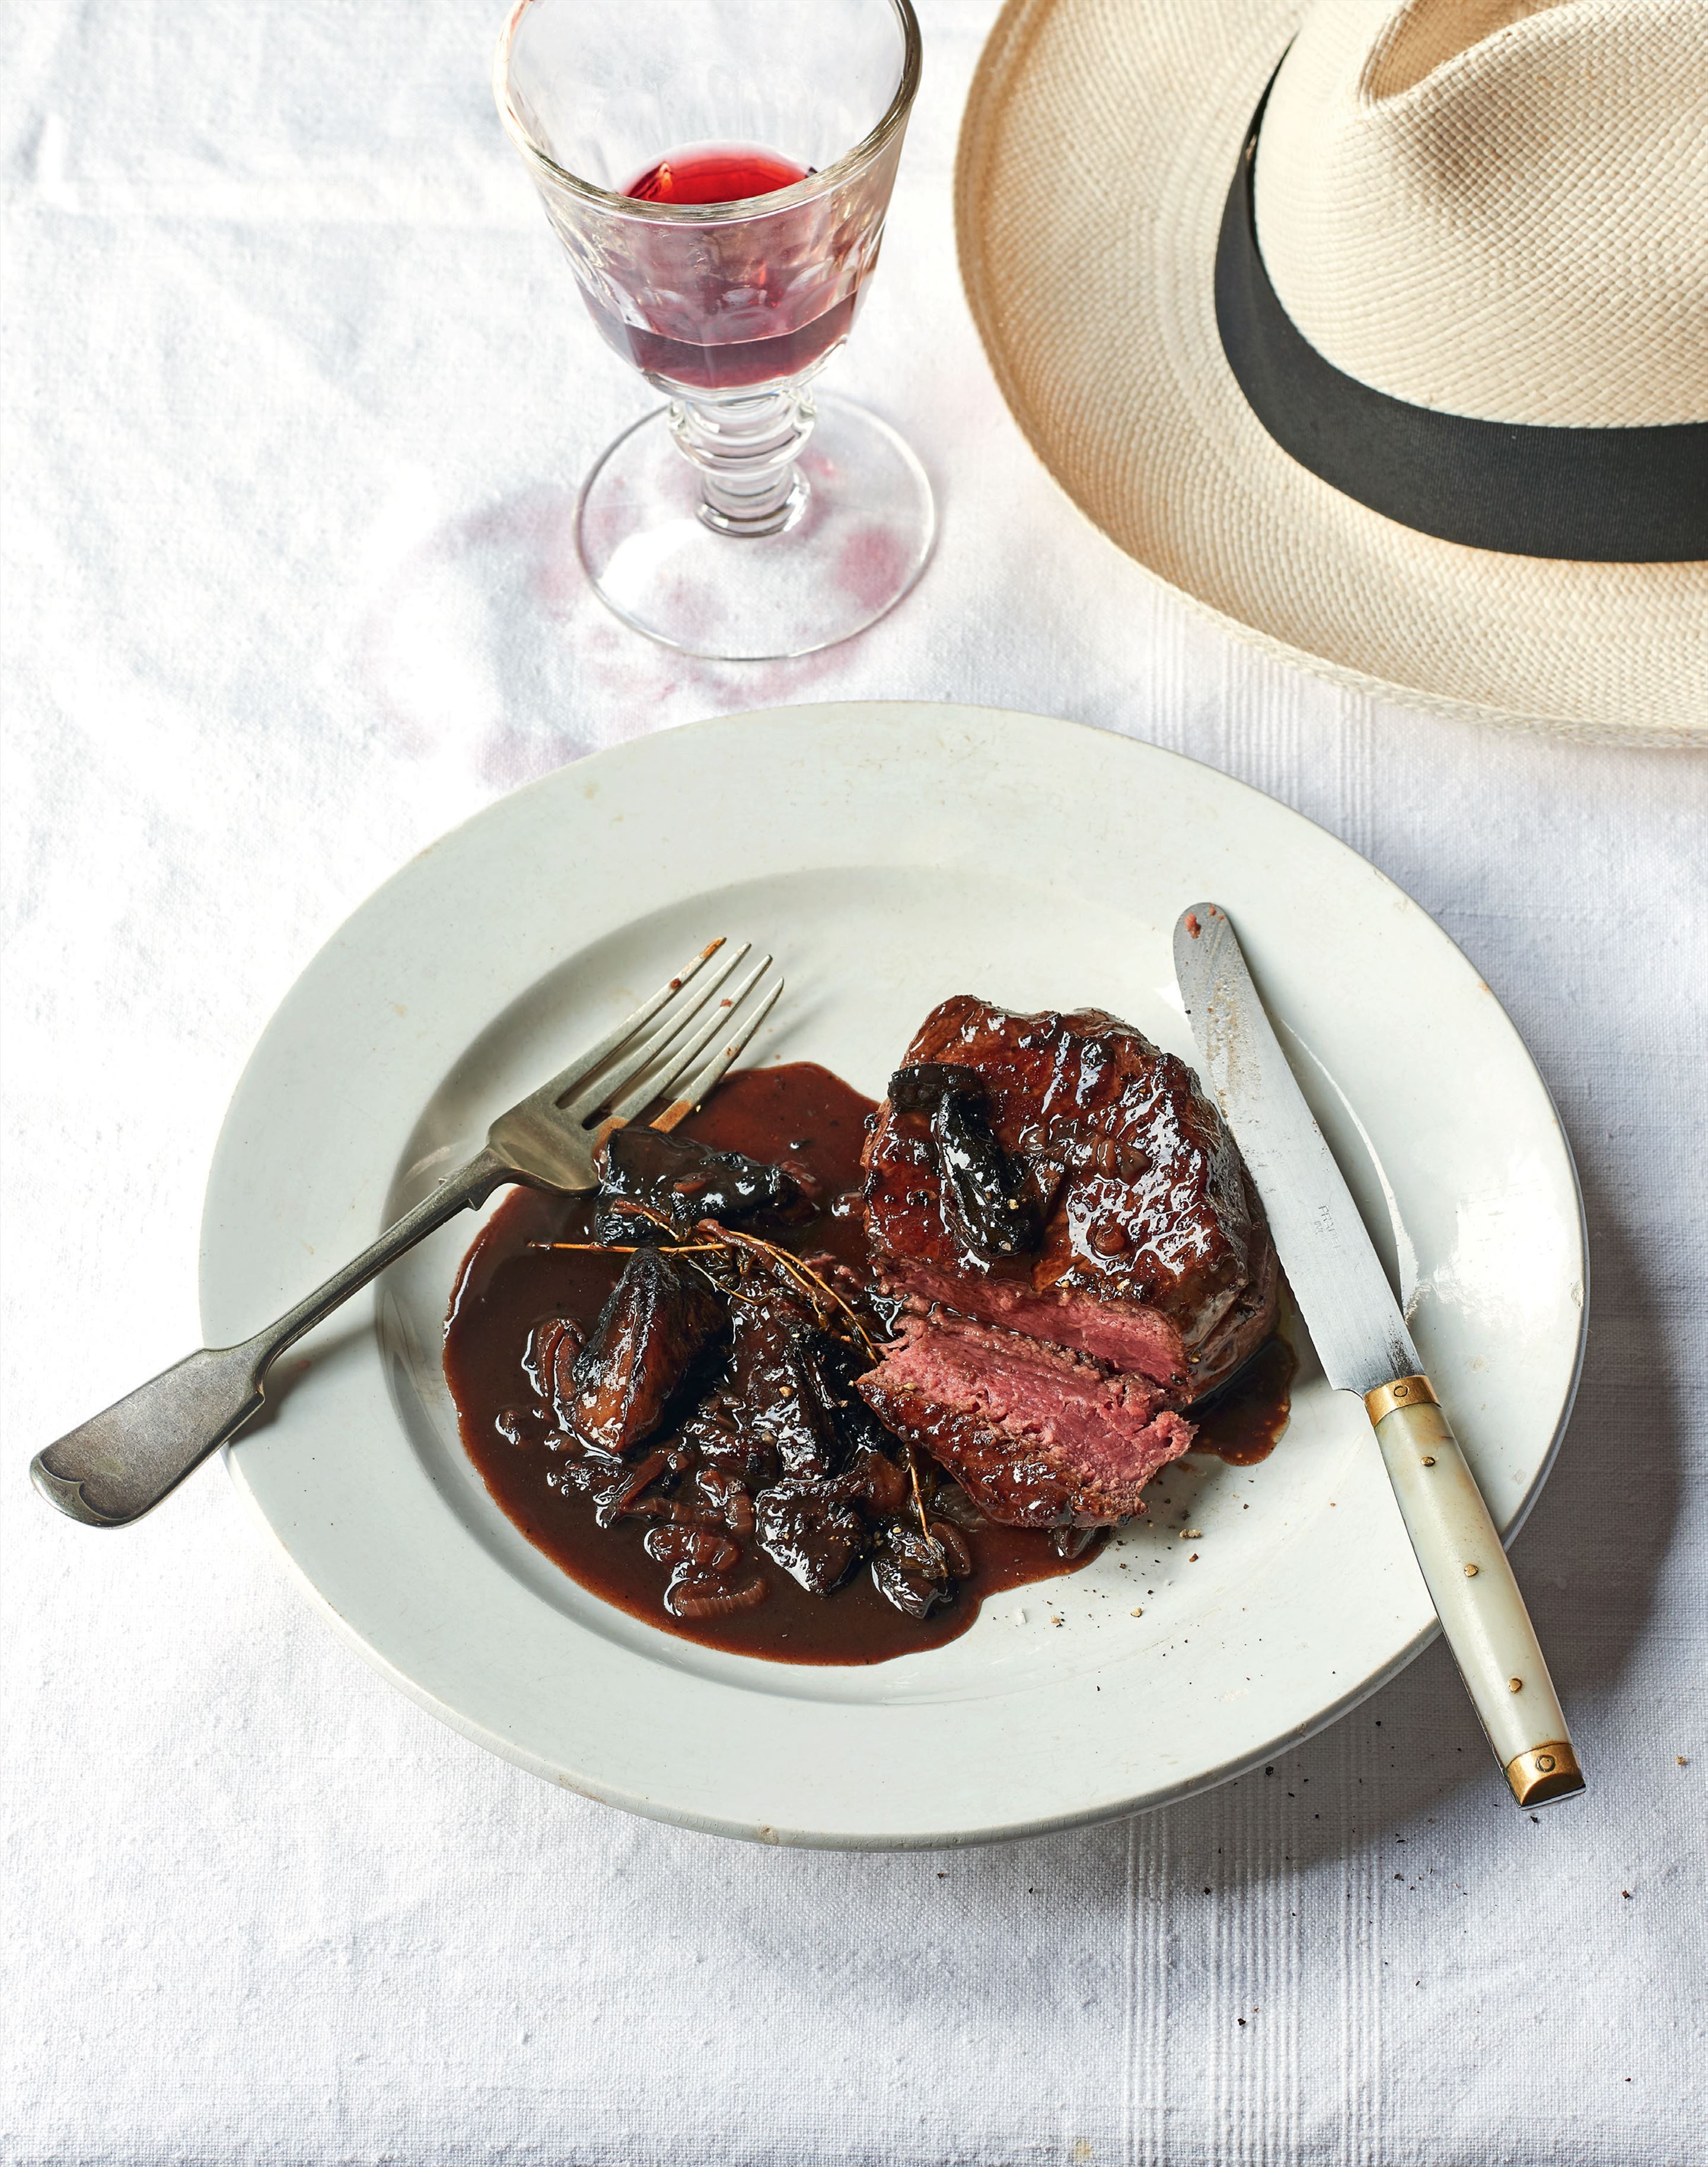 Fillet steak with Bordelaise sauce